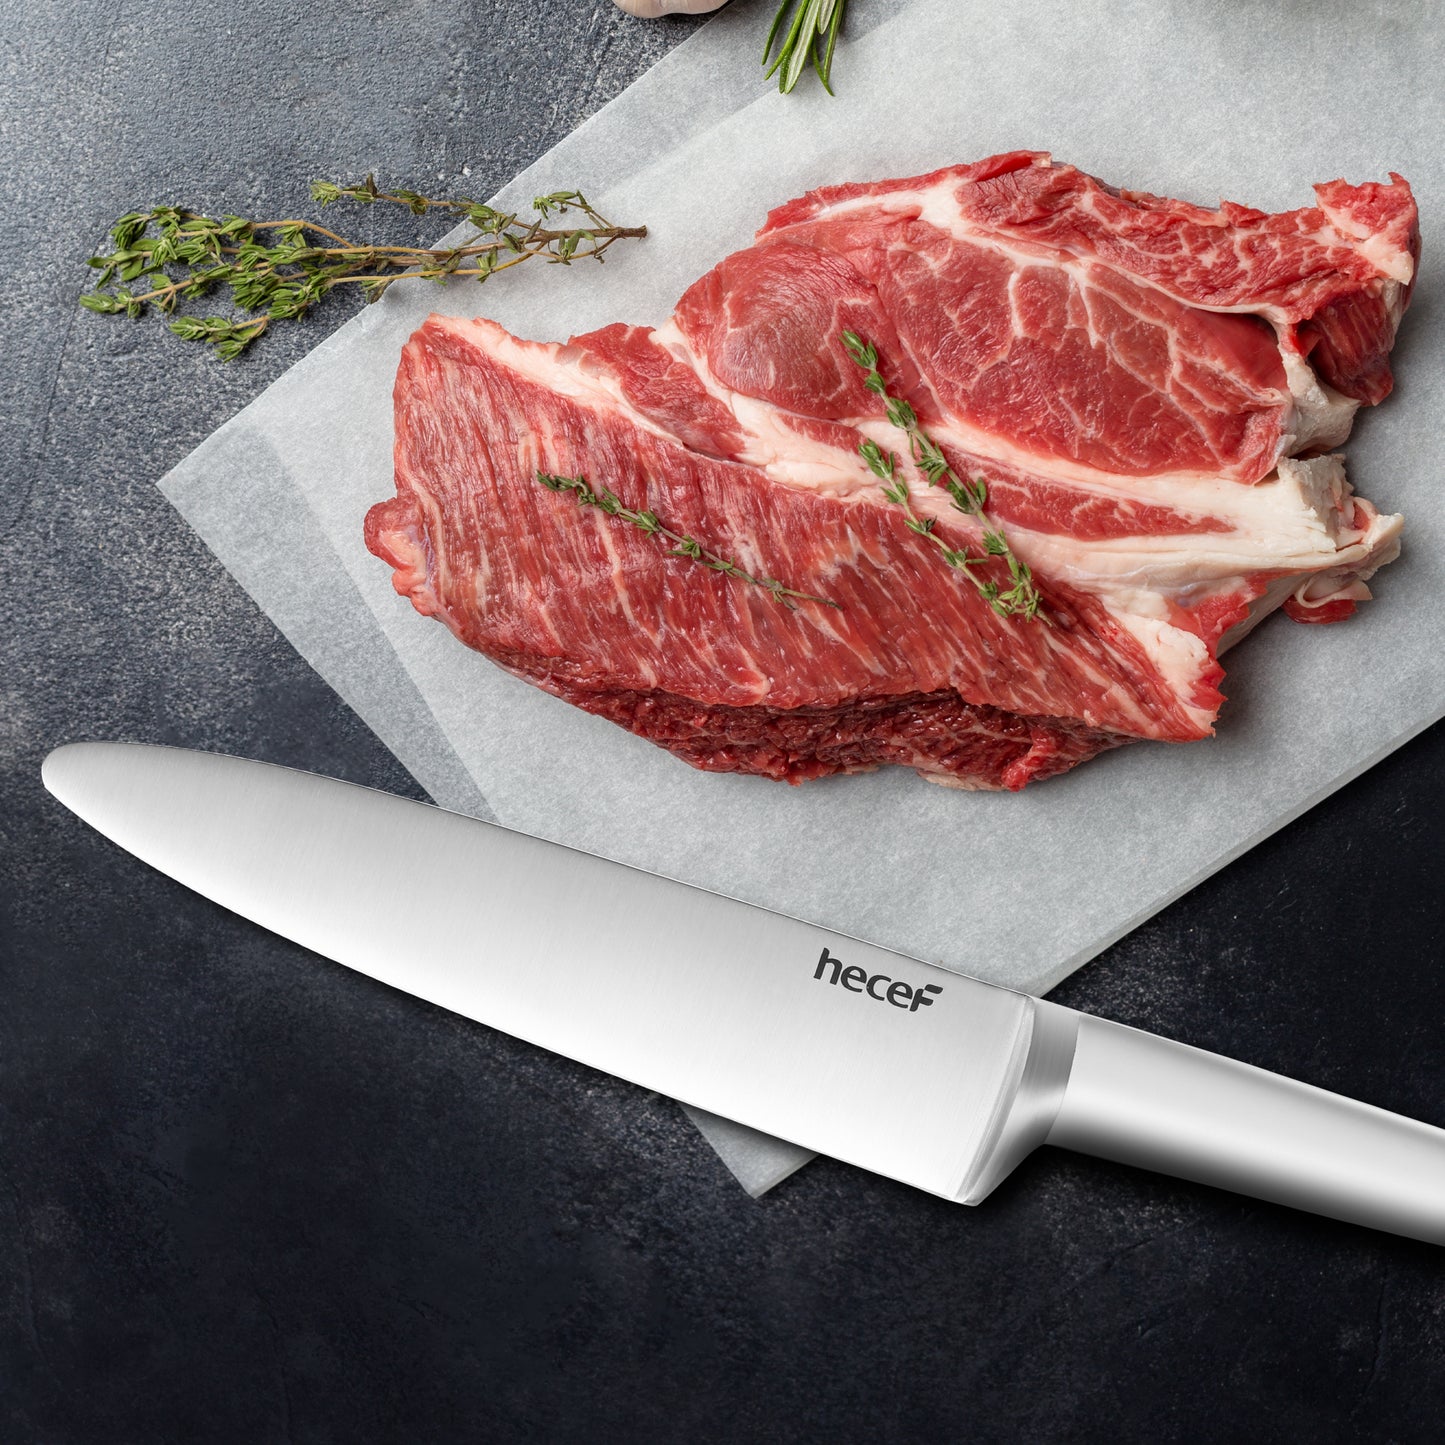 Hecef 15 PCS White Kitchen Knife Set with Wooden Block, Stainless Steel Ultra Sharp Kitchen Knife Set with 6 PCS Steak Knives, Meat Scissors, Sharpener Steel, Red Dot Design Award Winner 2022 - Hecef Kitchen